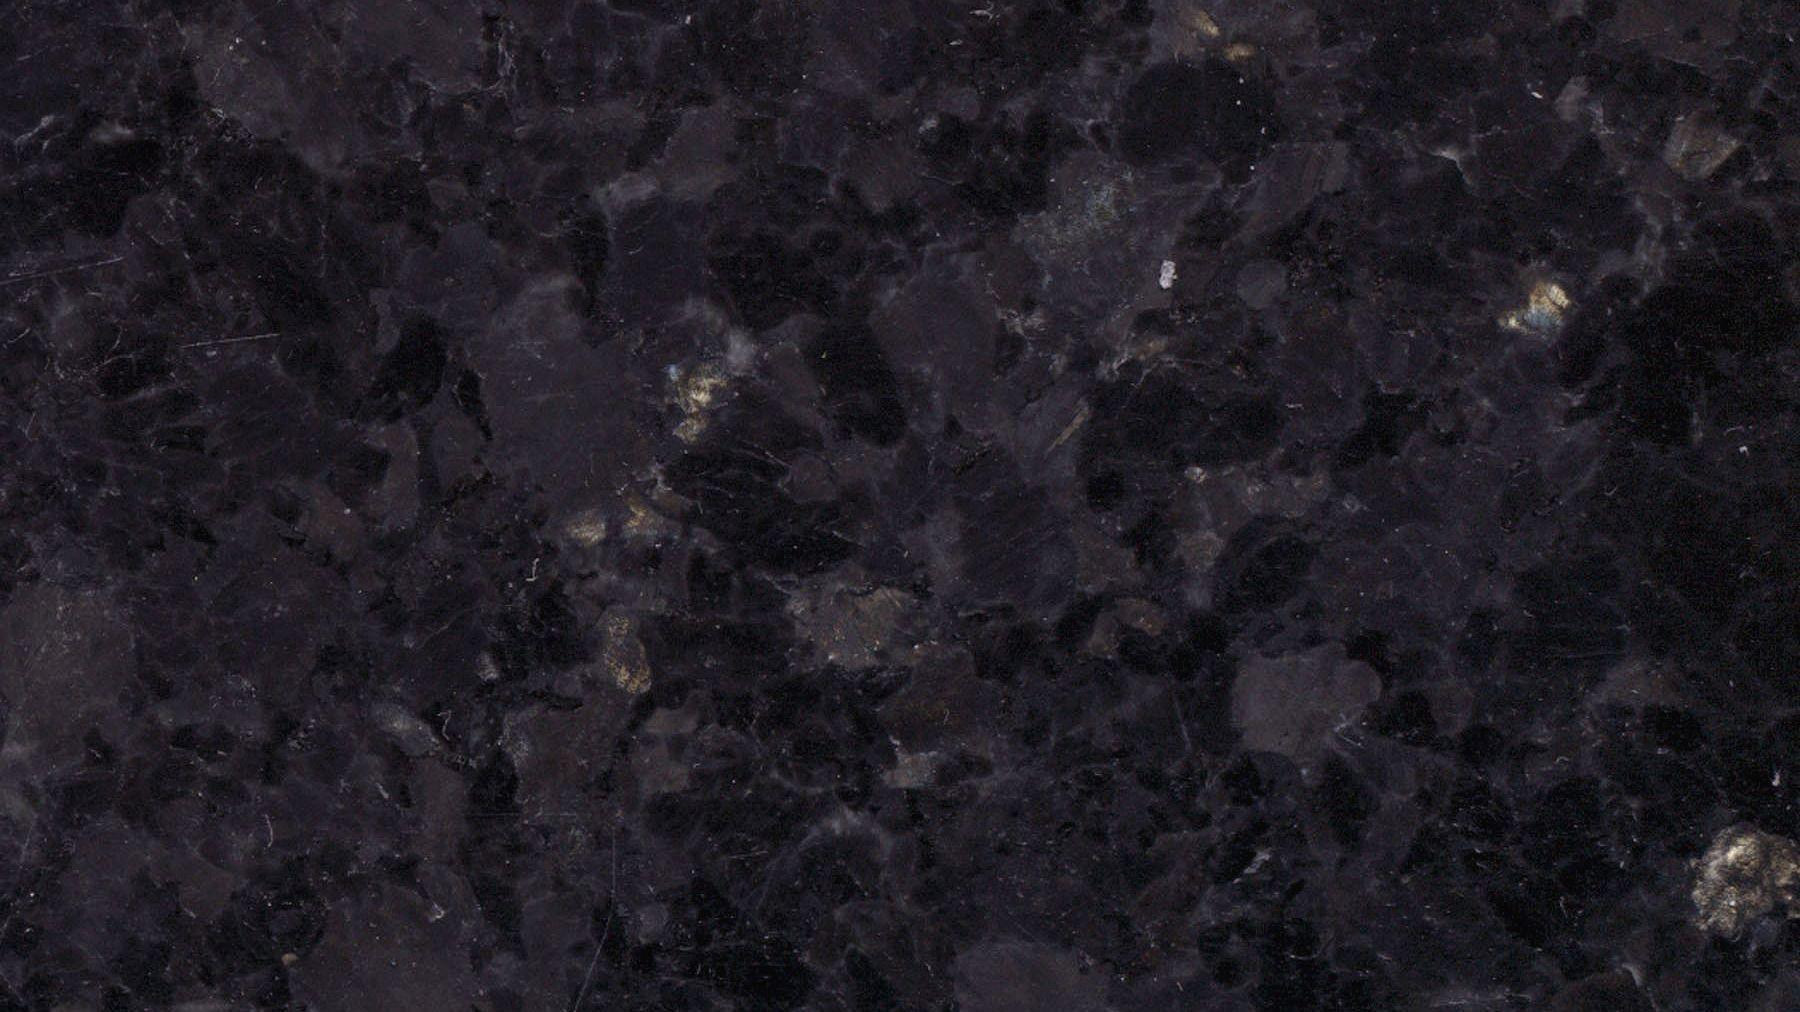 Black Marble Wallpaper HD. wallpaper.wiki